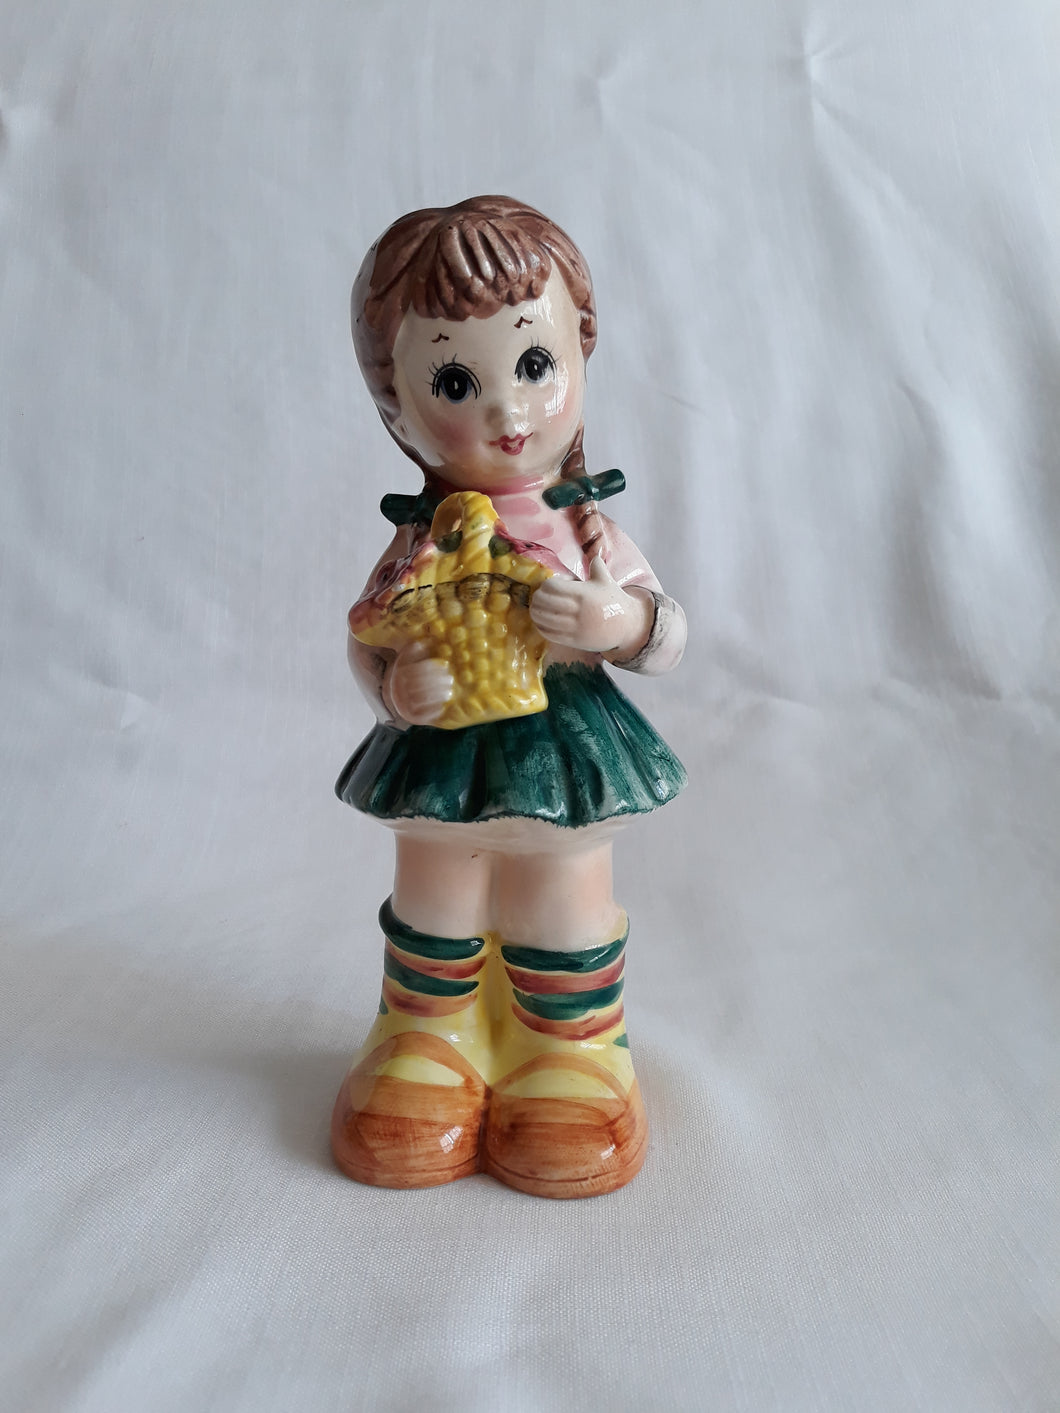 Vintage Handpainted Little Girl Figurine (HW 340)